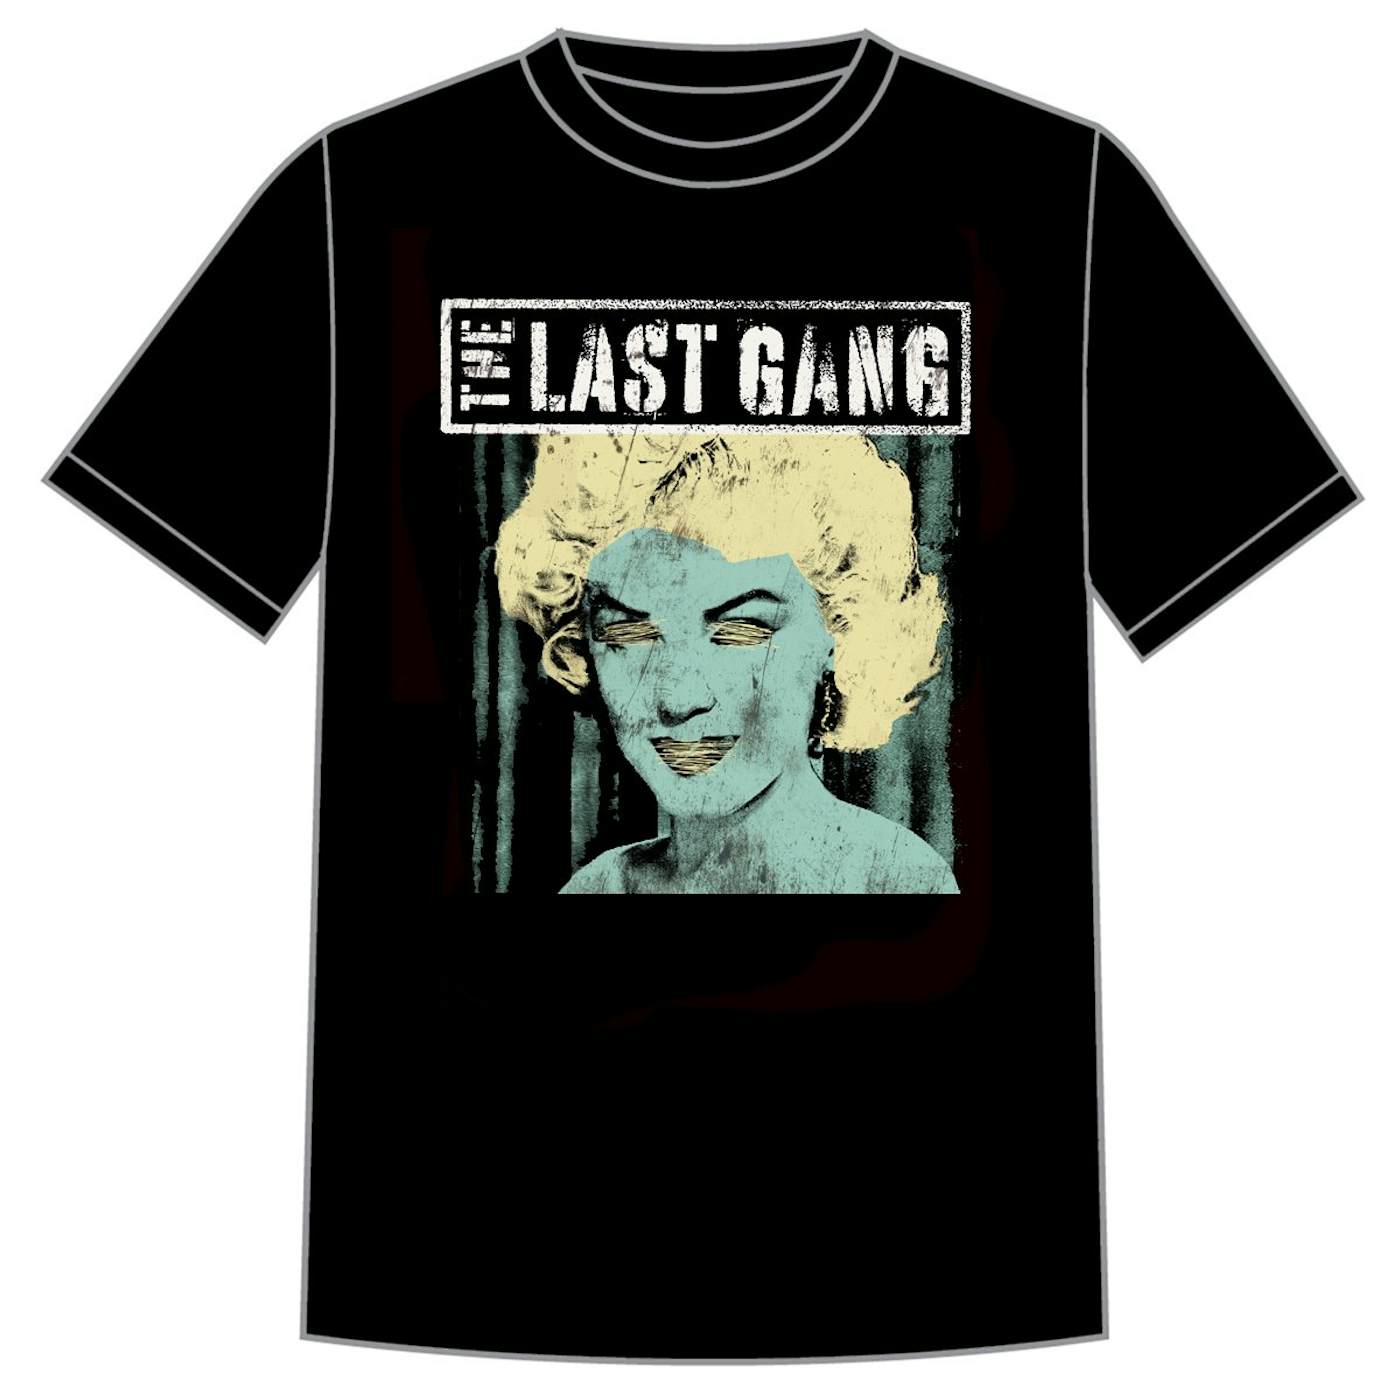 The Last Gang "Girl" Shirt